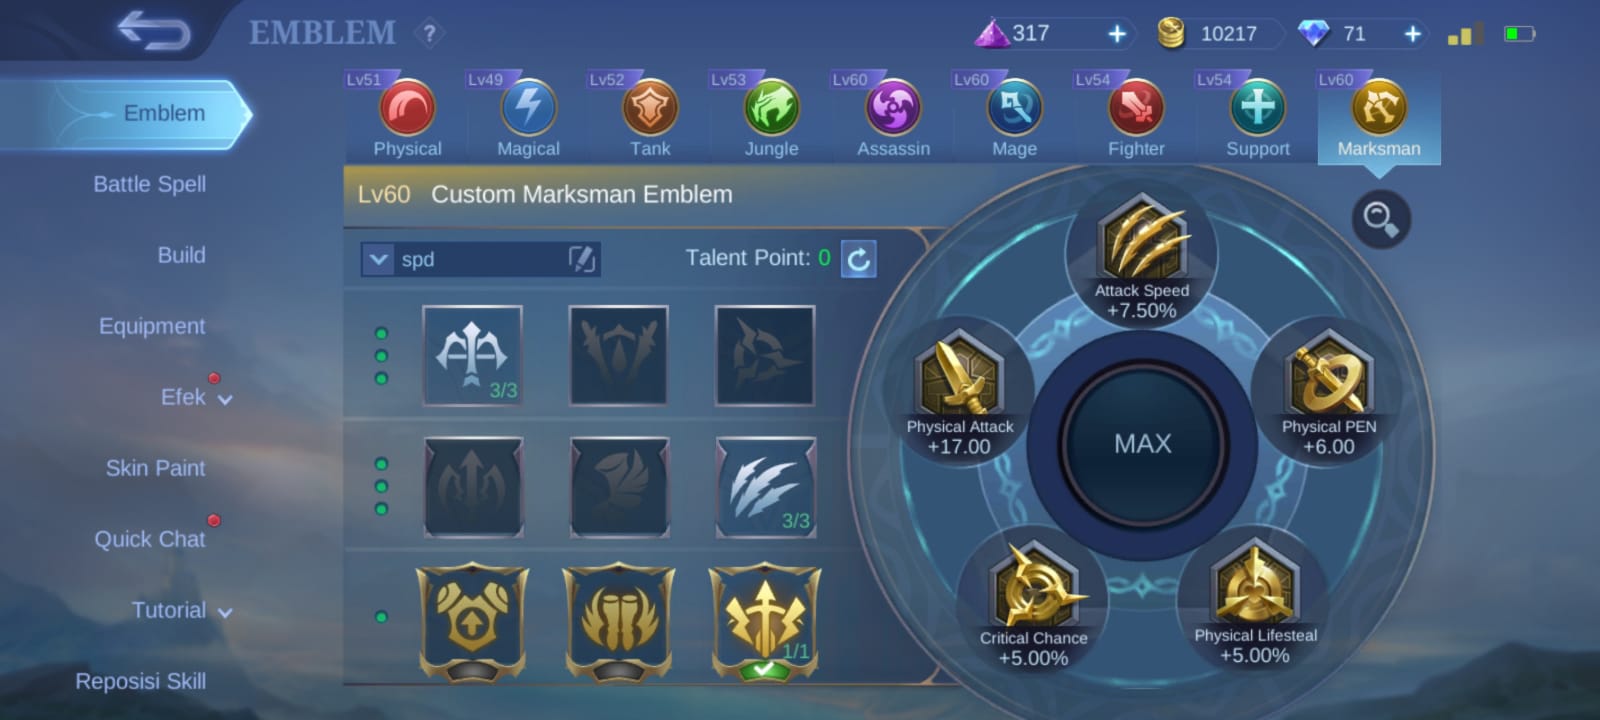 Miya Mobile Legends: Build Item, Emblem, Battle Spell